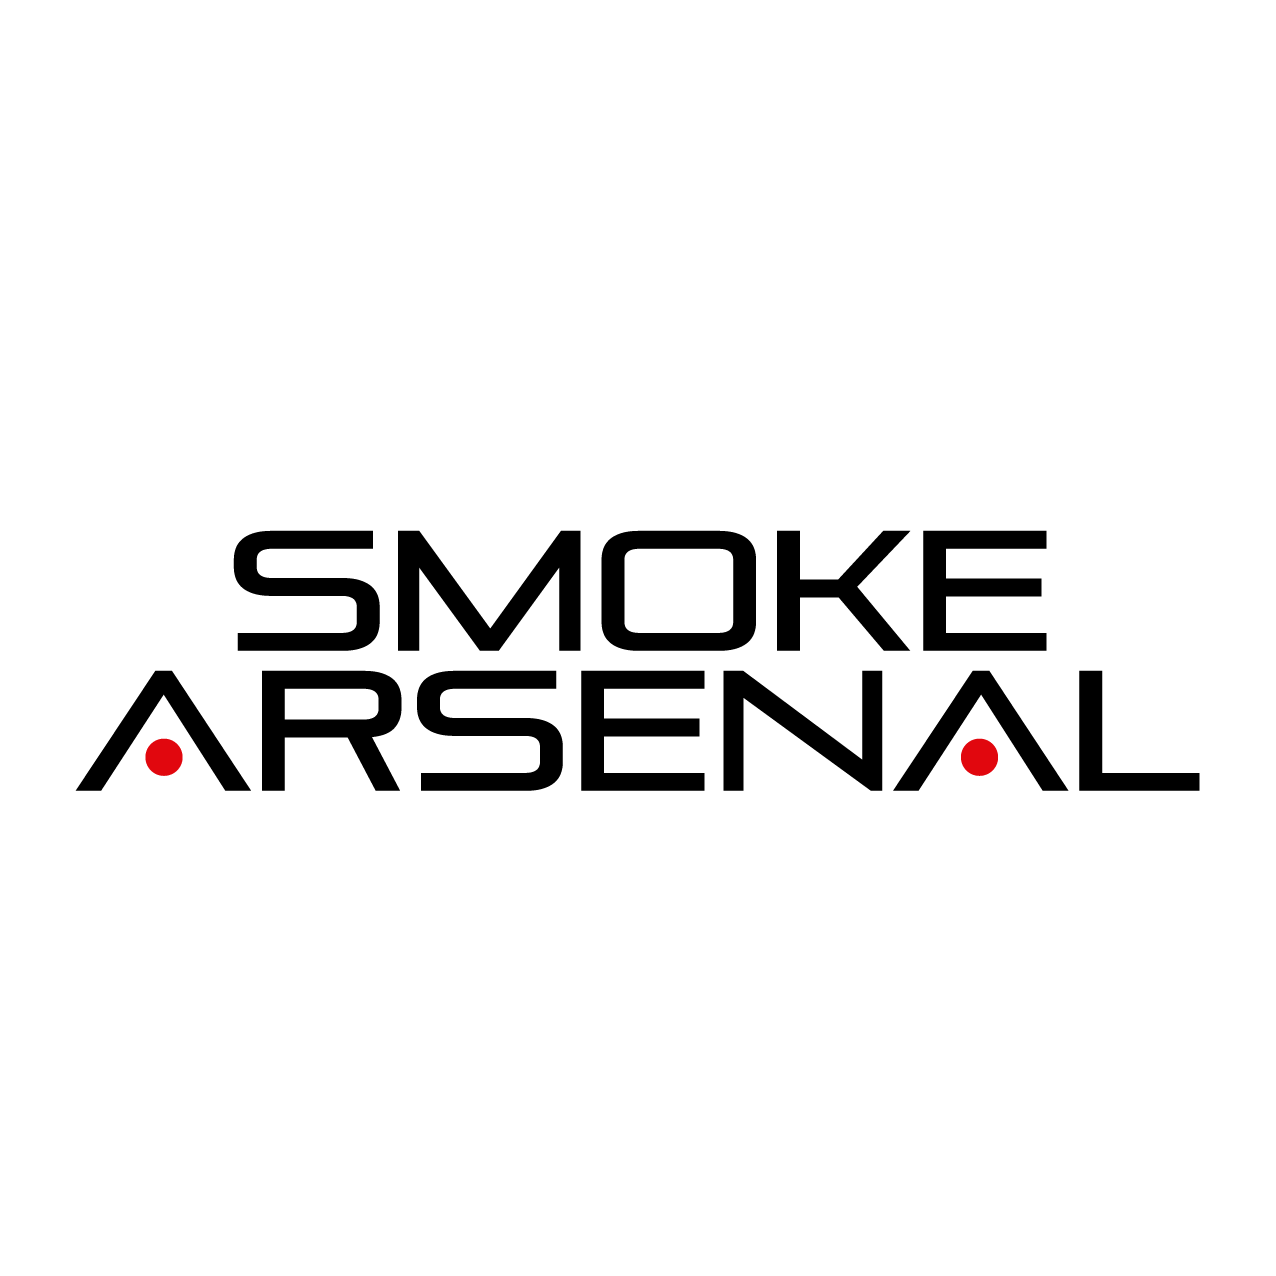 Smoke Arsenal